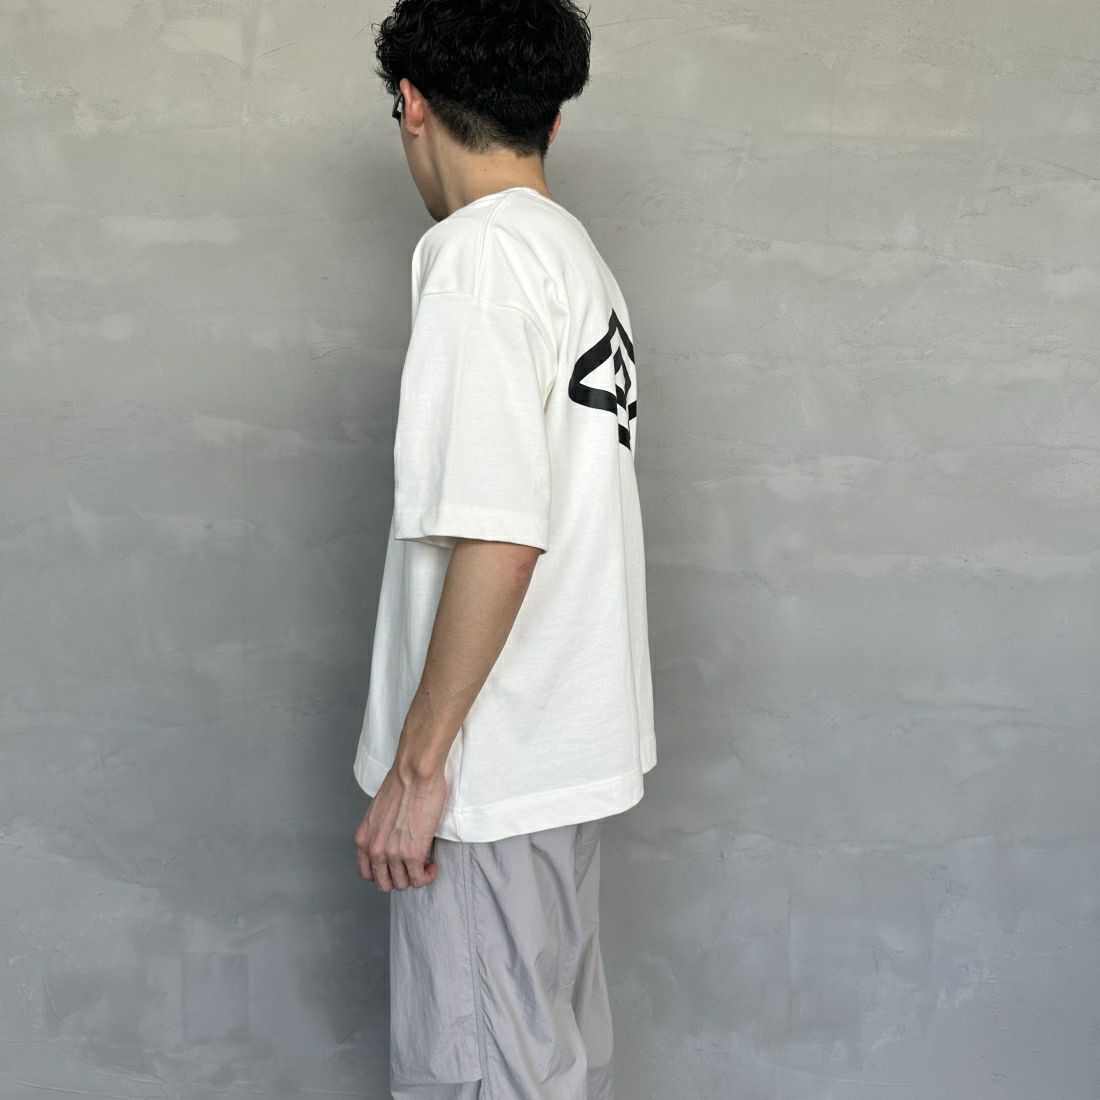 umbro [アンブロ] 別注 ラバーバックプリントTシャツ [UMNK-T0011-JF] WHITE &&モデル身長：168cm 着用サイズ：M&&